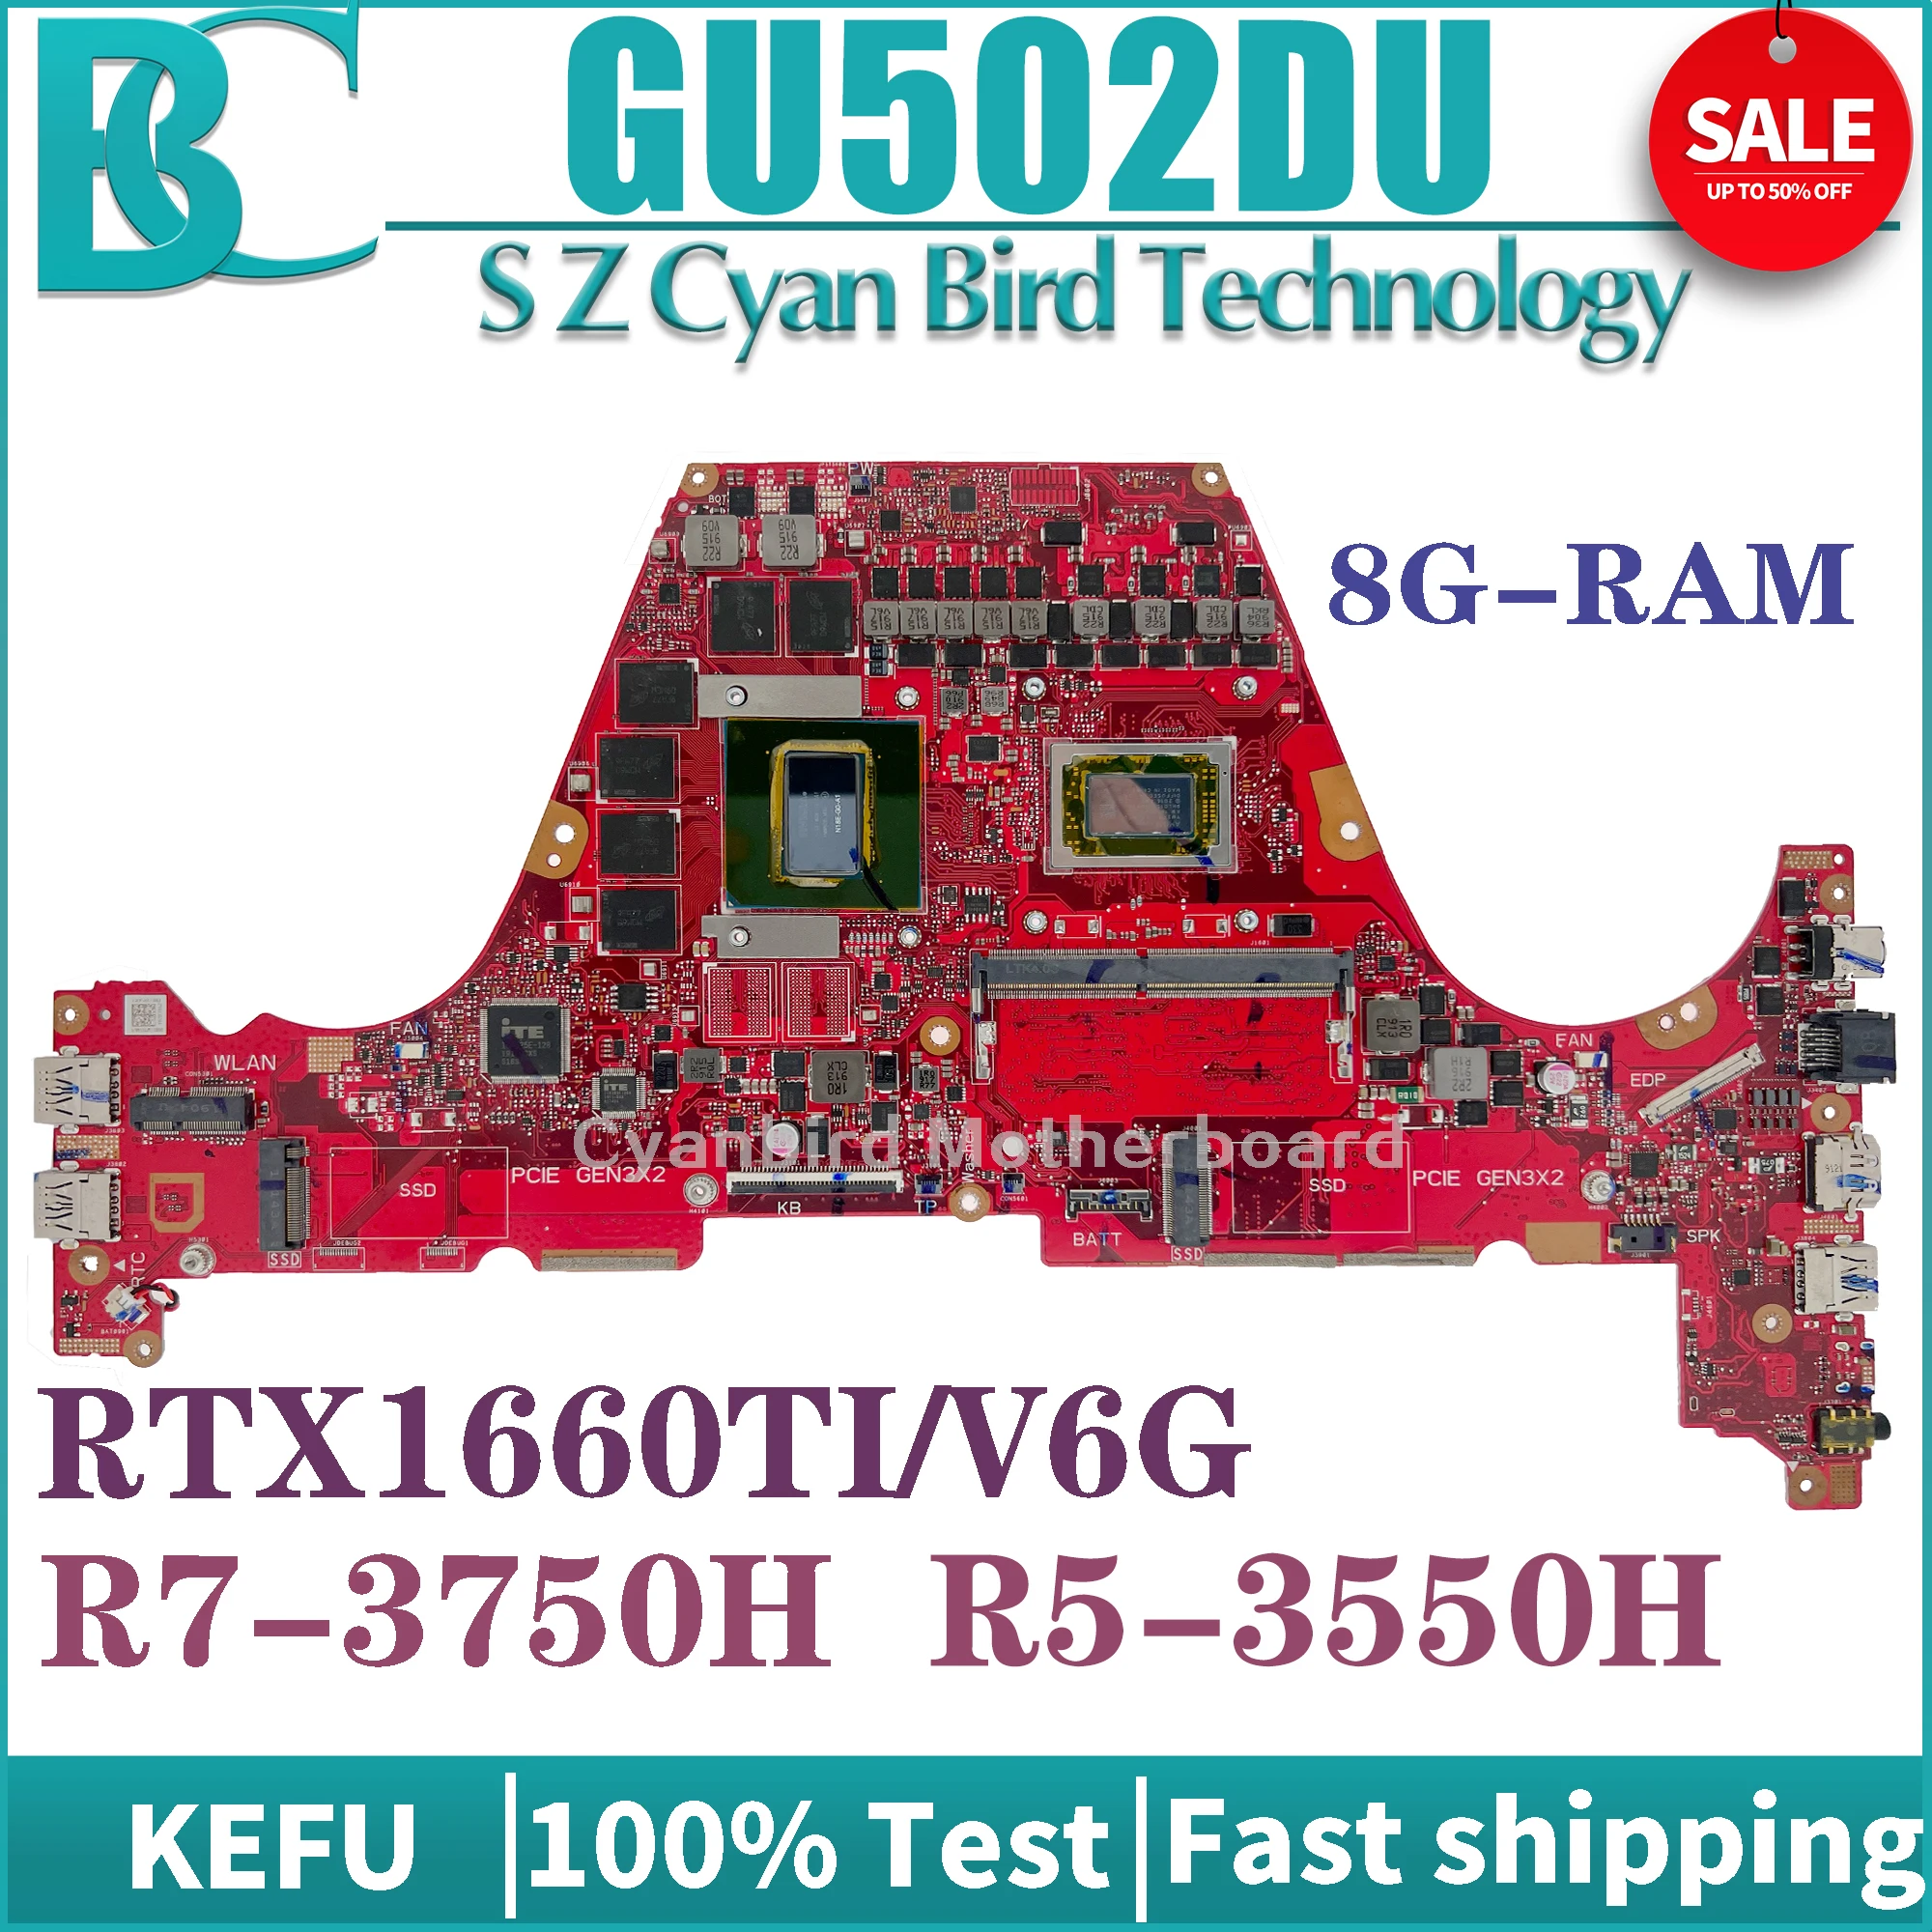 

KEFU GU502DU Motherboard For ASUS GU502D GU502 GA502 GA502DU Laptop Mainboard RAM-8G R5-3550H R7-3750H GTX1660TI/6G 100% Test OK